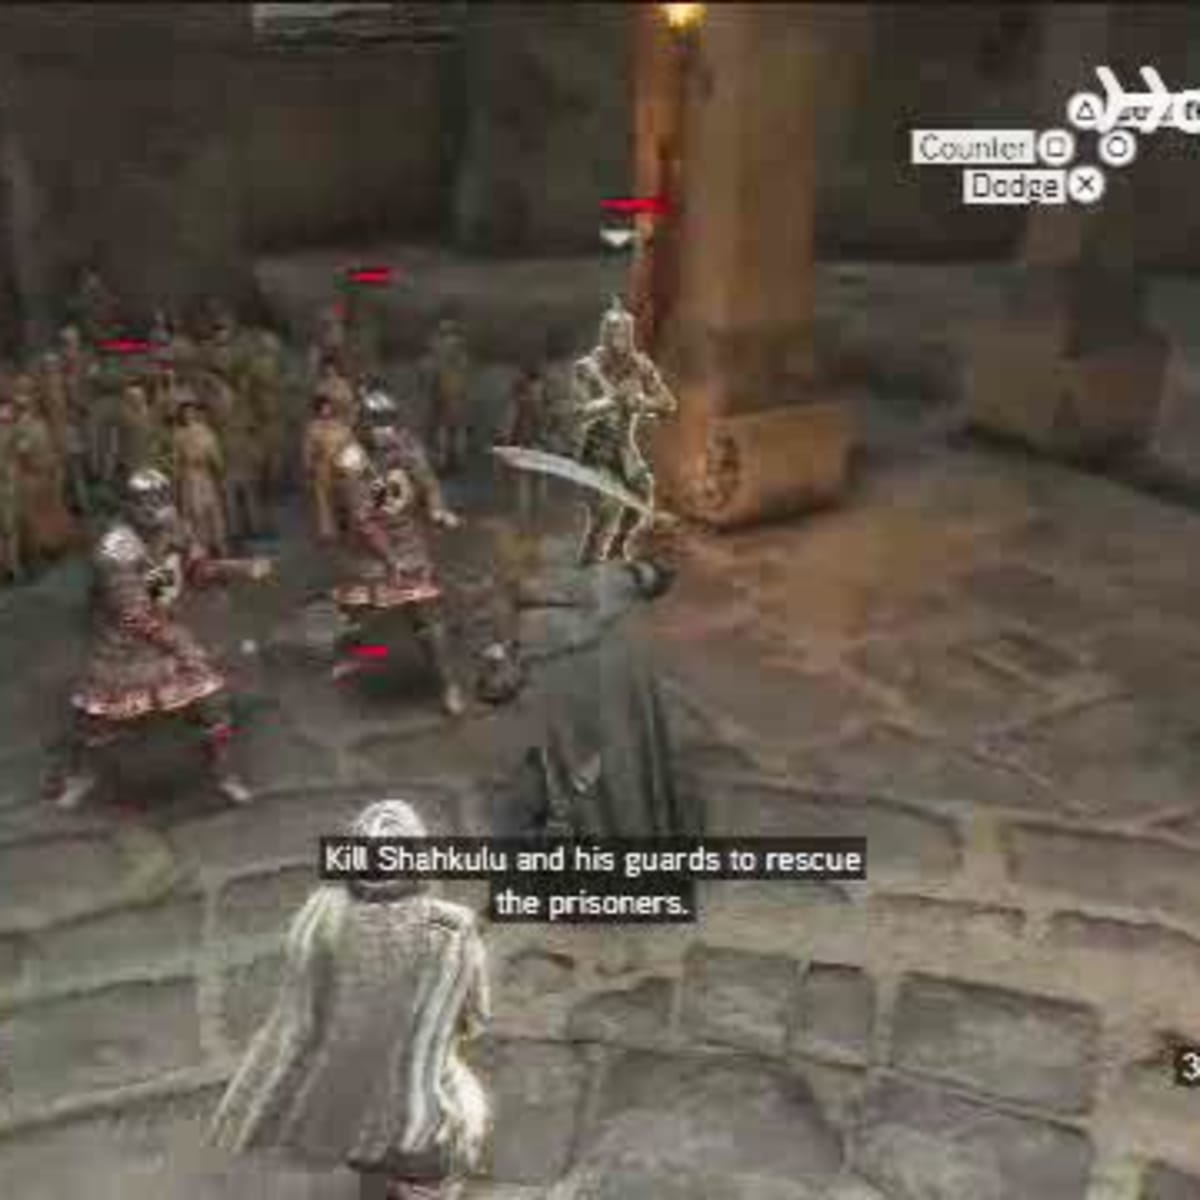 Assassin's Creed: Revelations - Walkthrough - Part 1 (PC) [HD] 